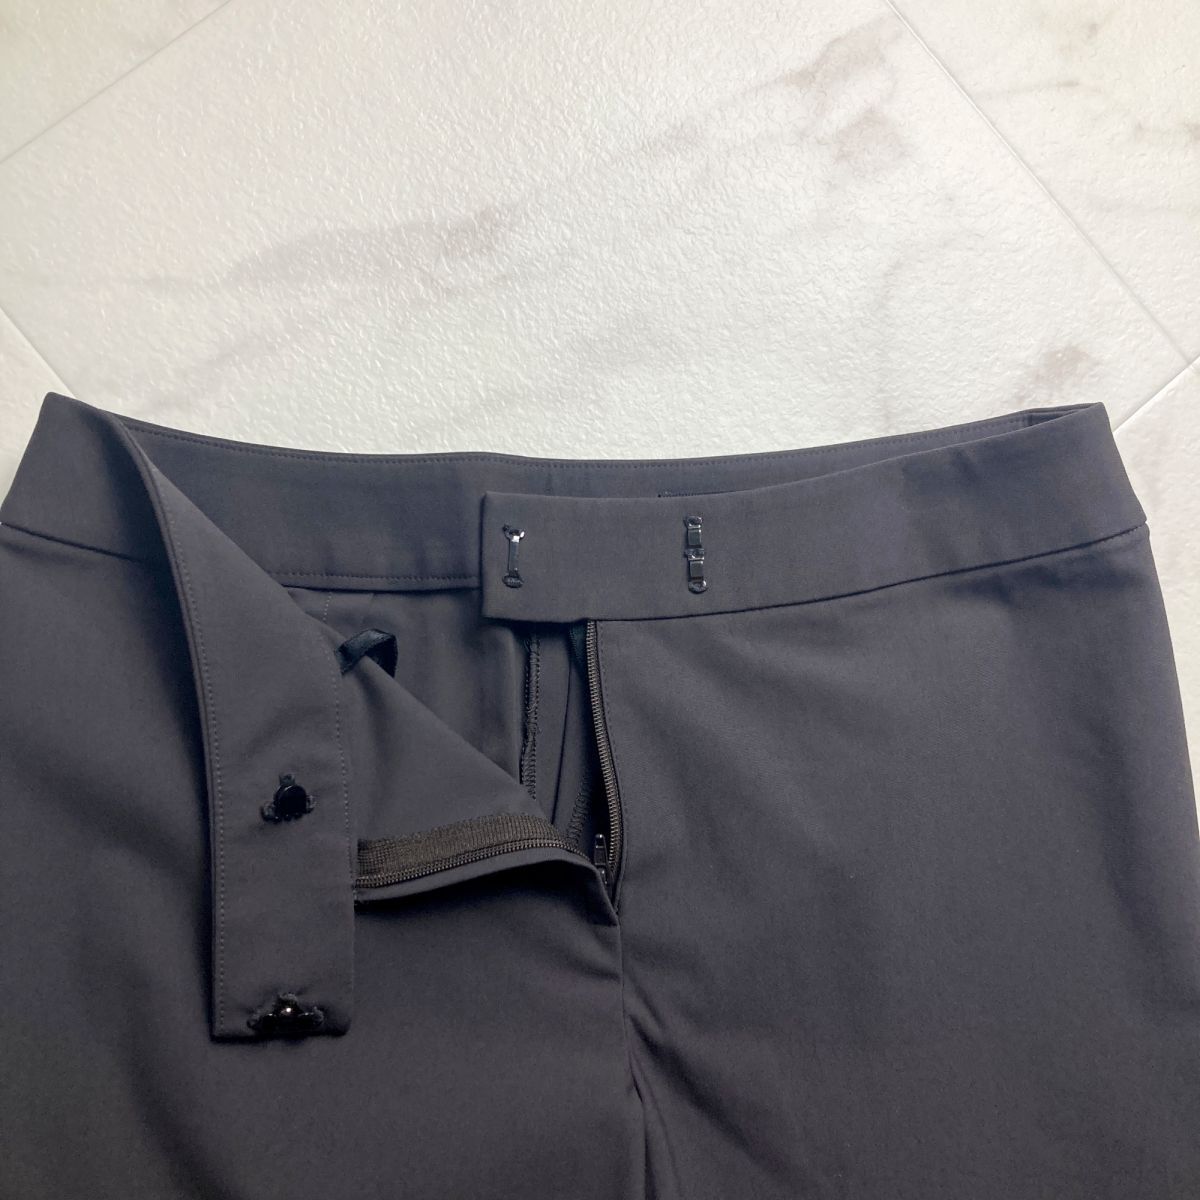  beautiful goods Leilian Leilian strut pants slacks bottoms lady's gray ju size 7*MC1239